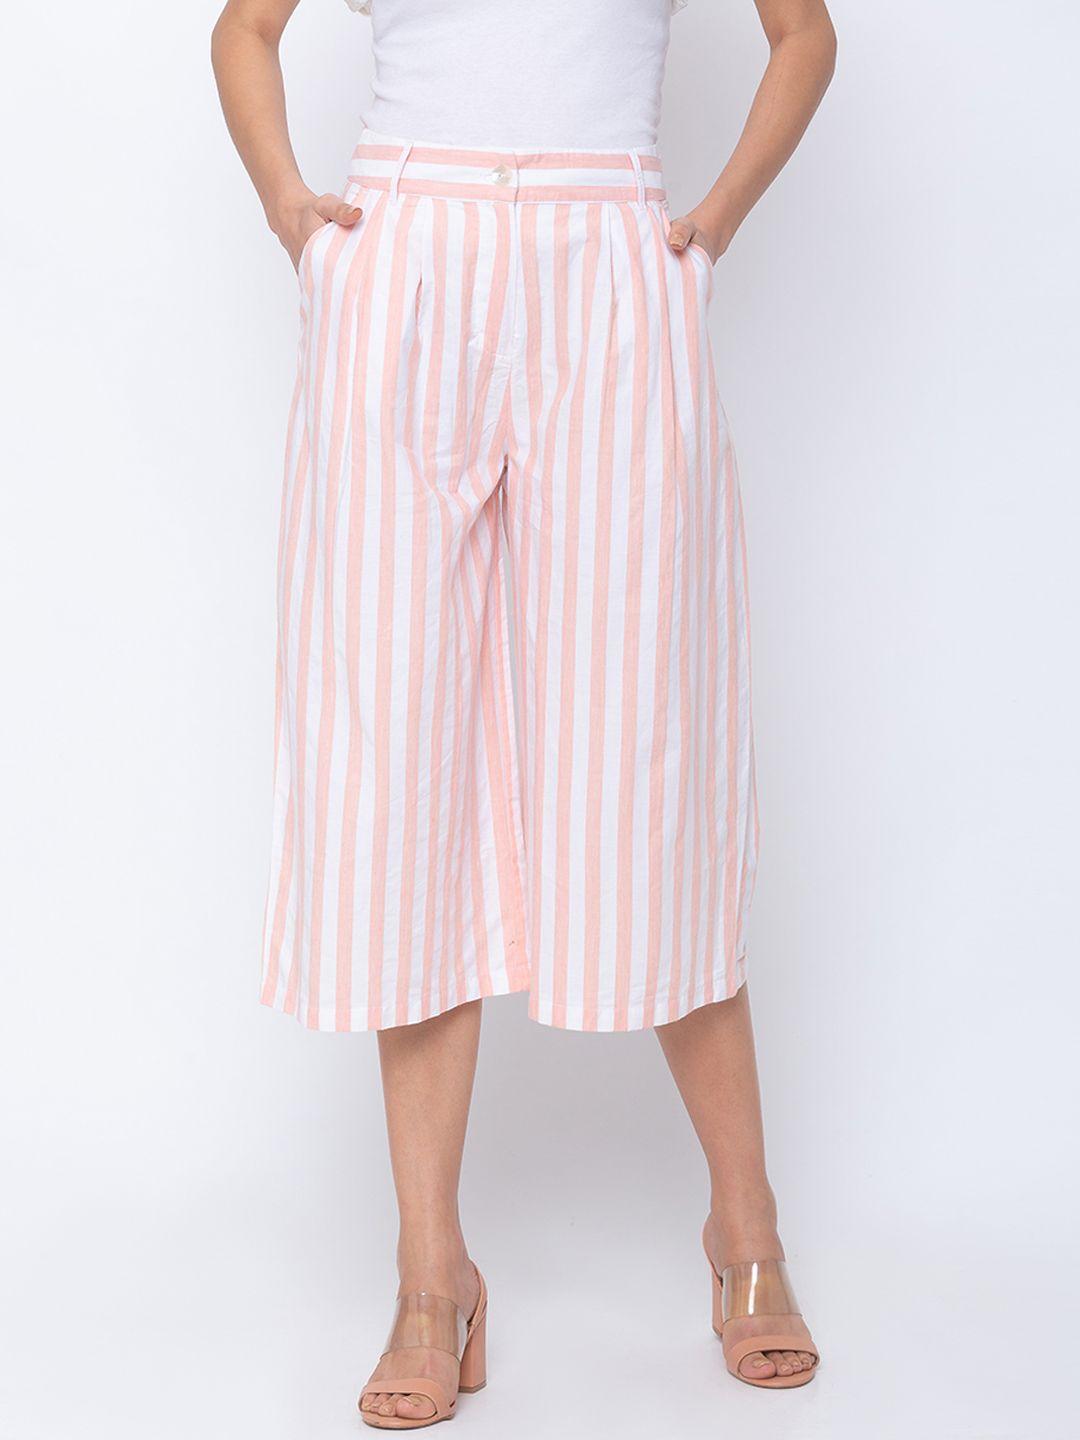 globus women white & orange striped culottes